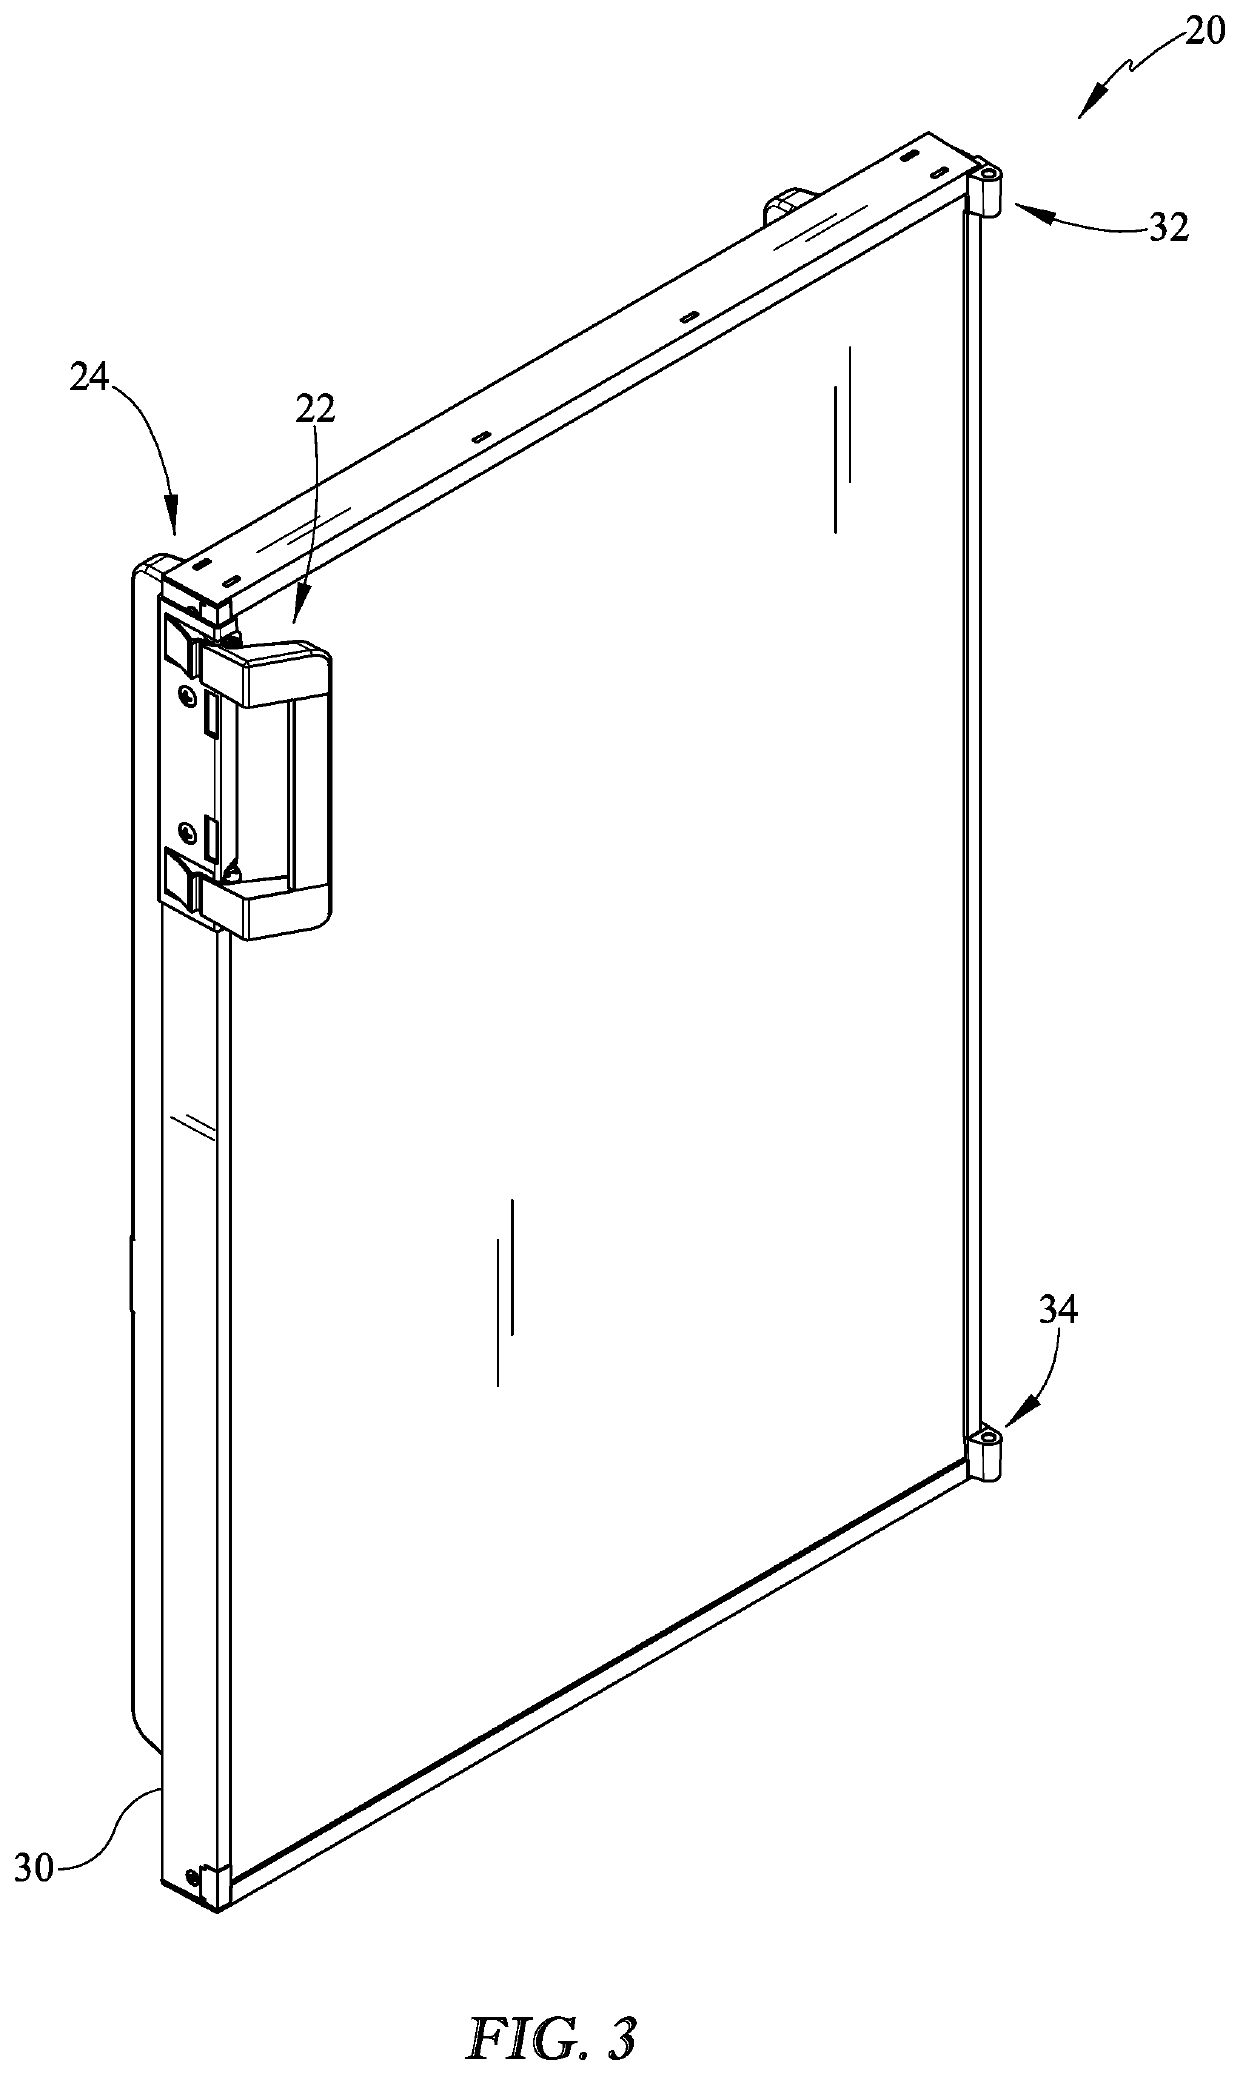 Molded frame for a reversible appliance door